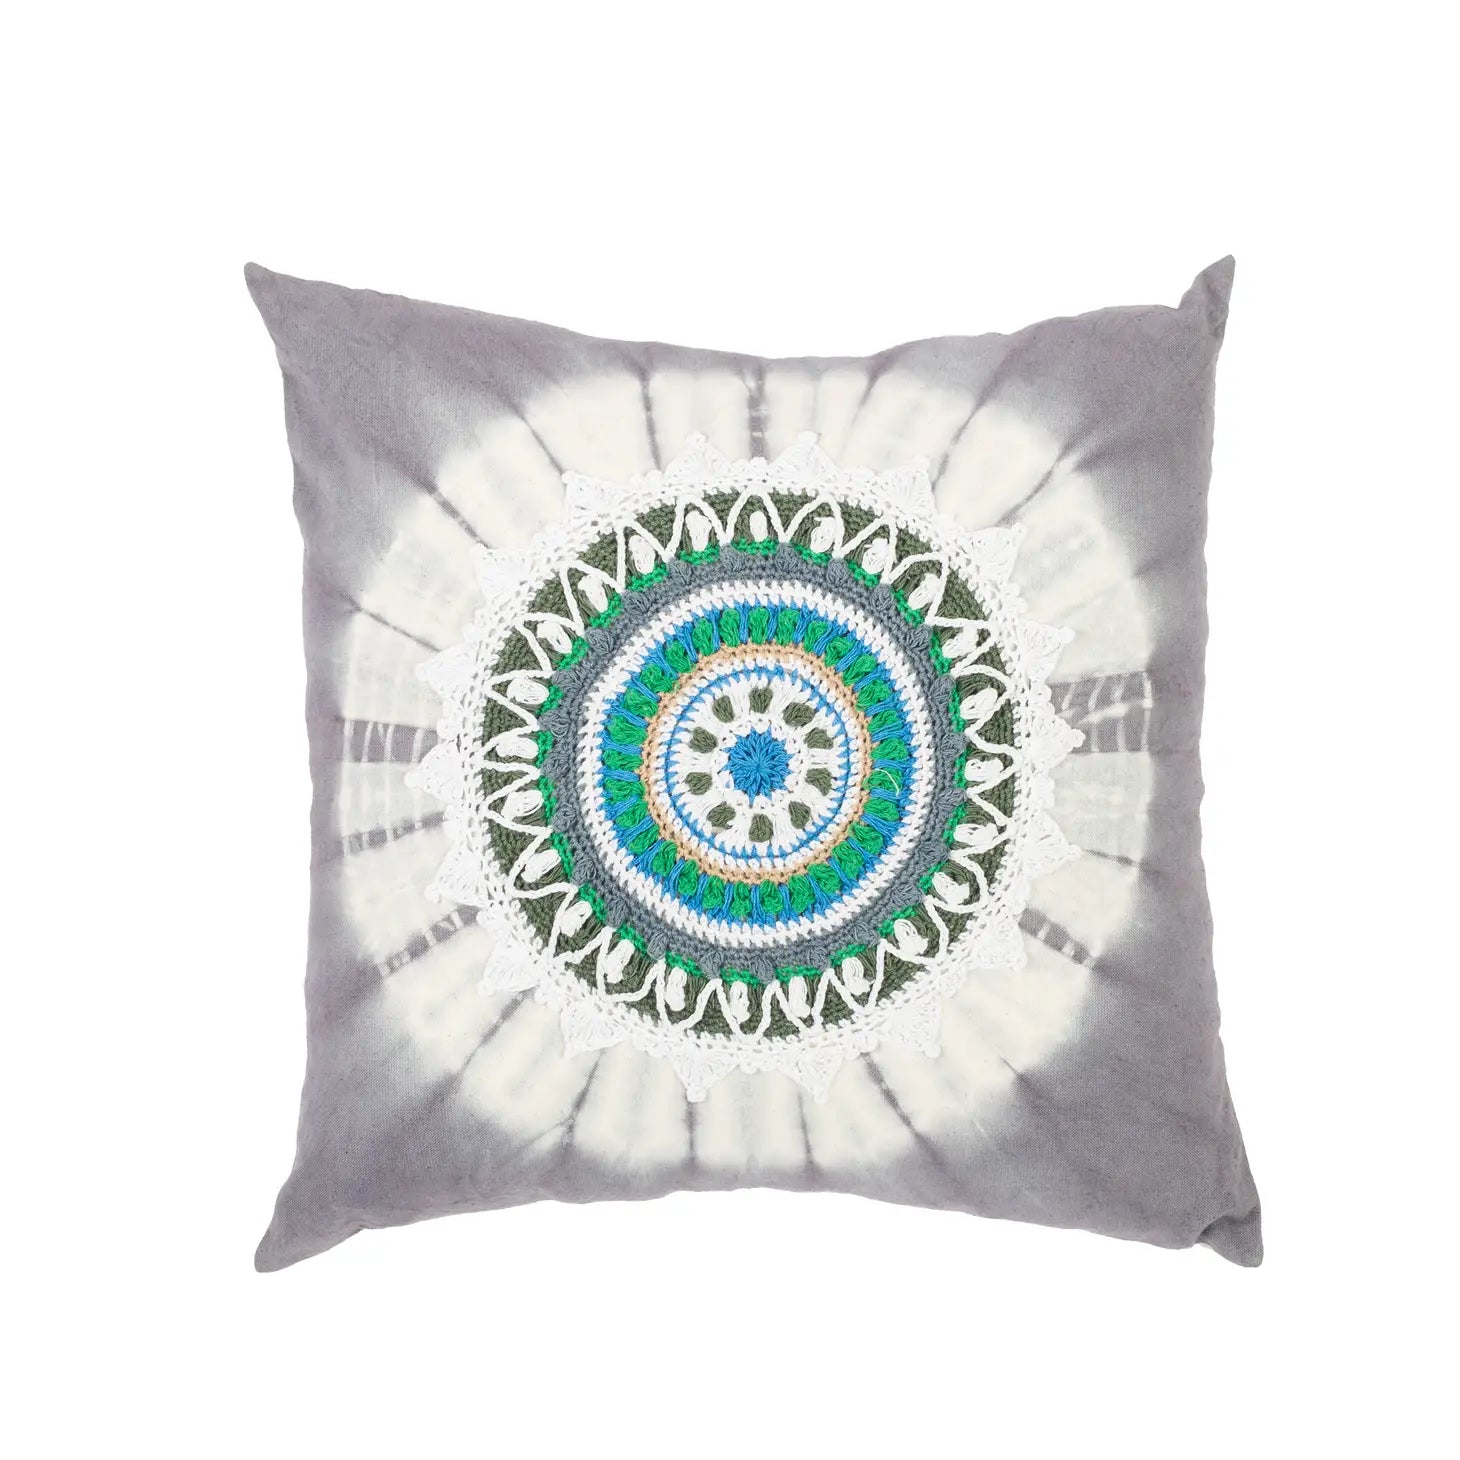 Crochet Mandala Throw Pillow -Gray - Moon Room Shop and Wellness